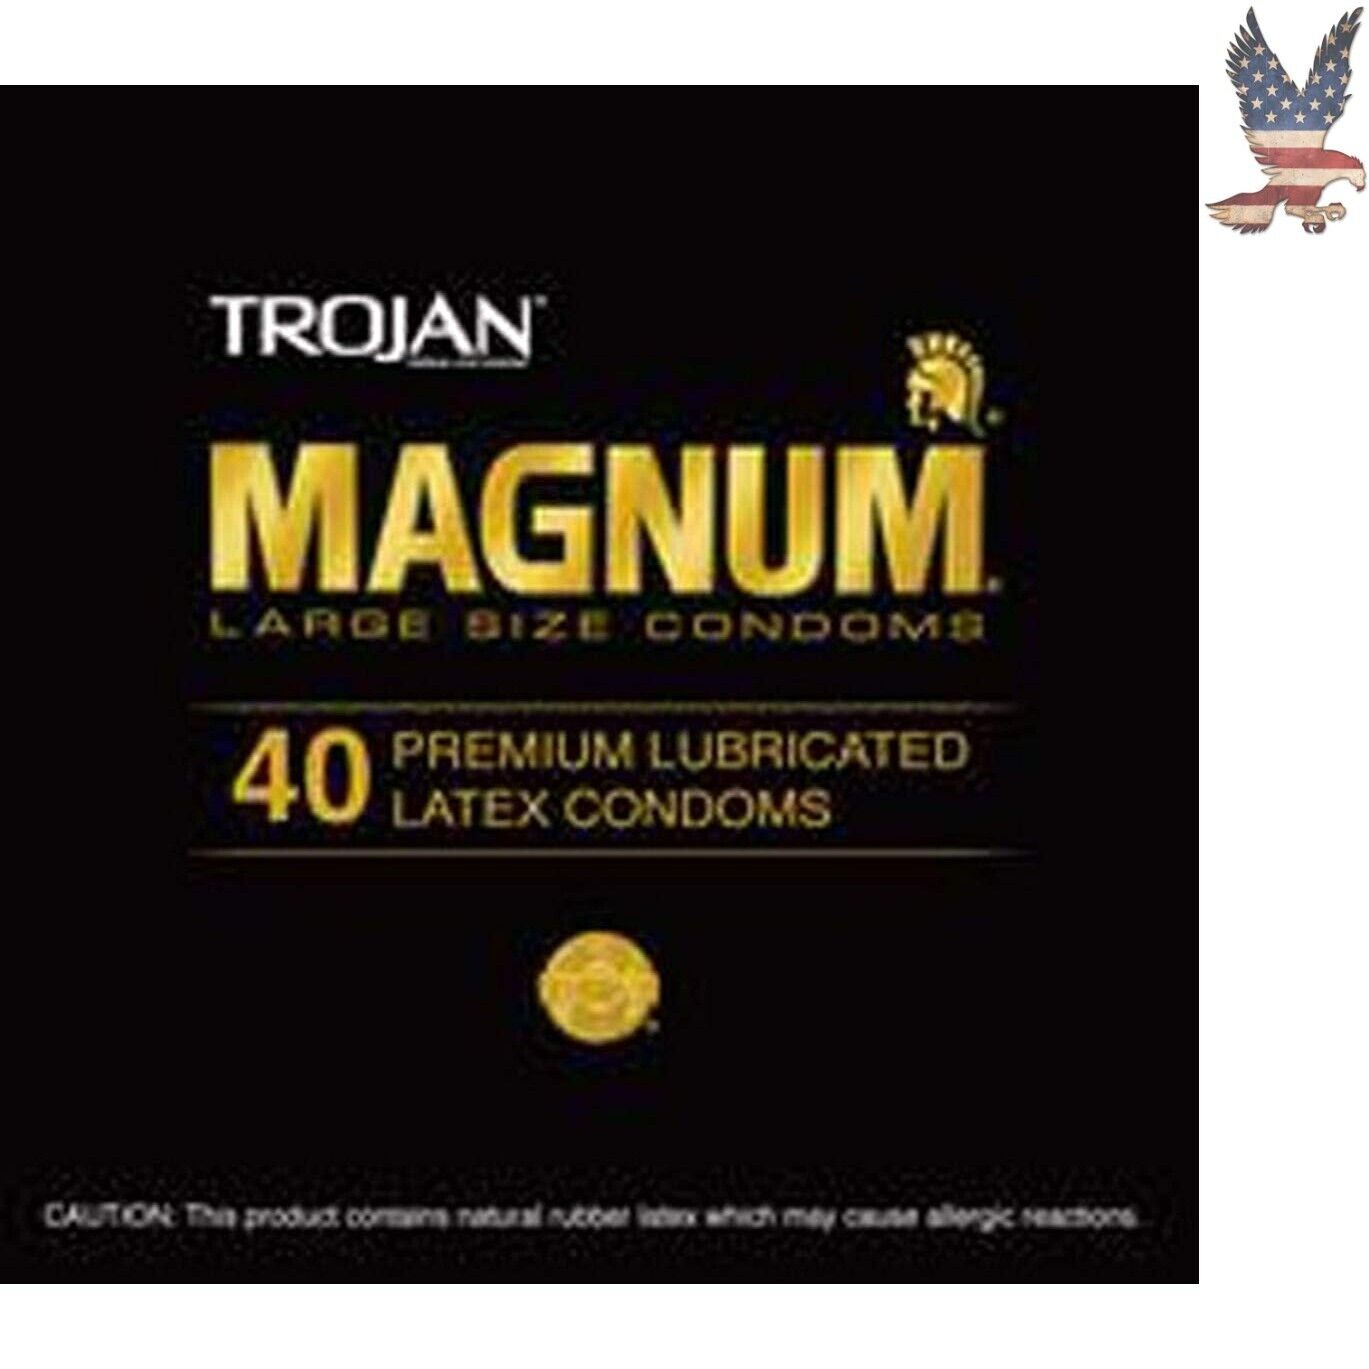 Magnum XL Condoms - Premium Lubricated - Comfort & Safety - 40 Count - Reliable